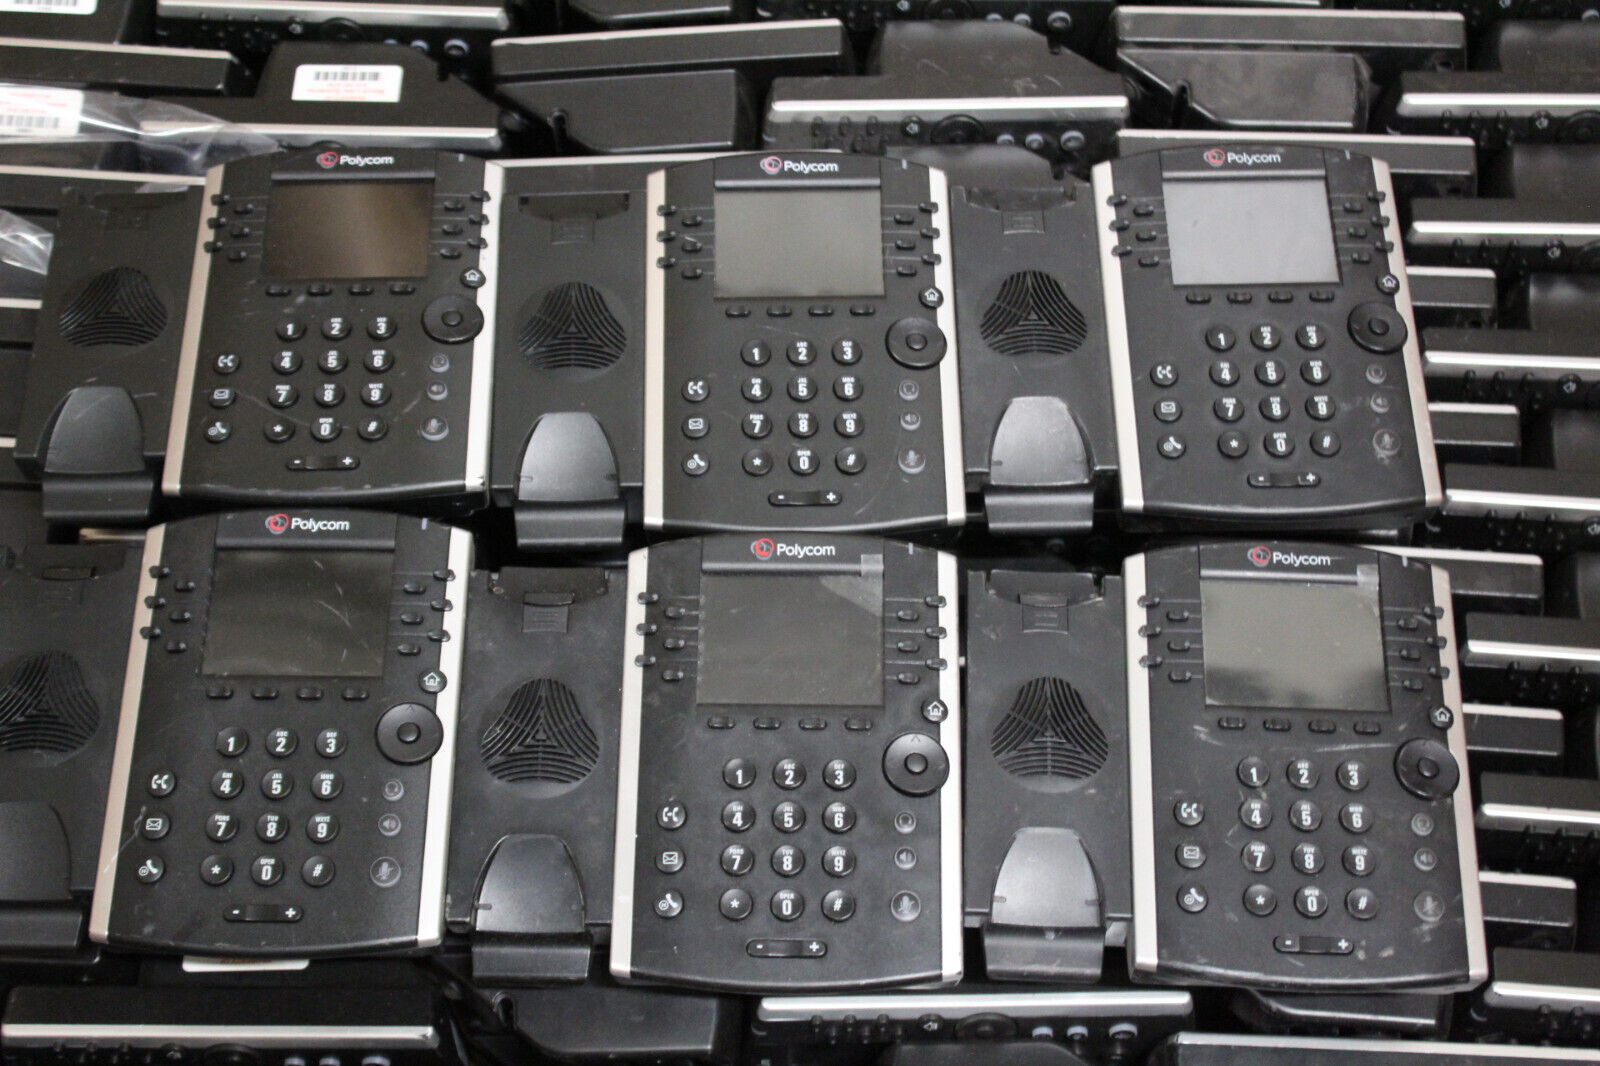 Lot of 100 Polycom VVX 410 12-Line Office IP Phones W/ Stands & Handsets